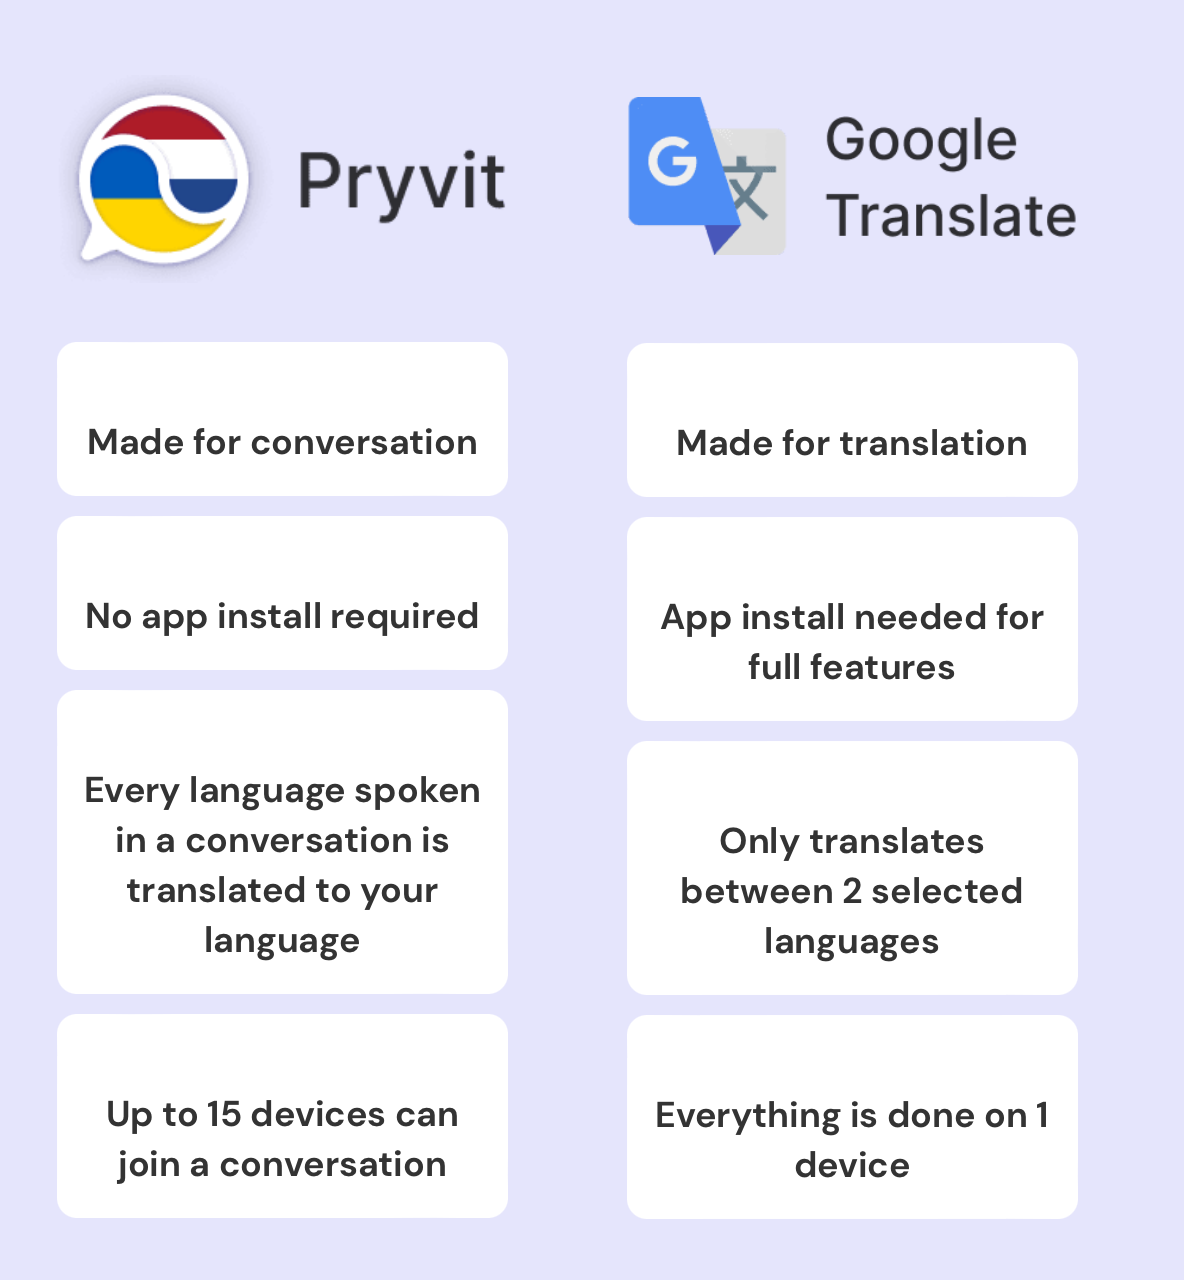 Comparison Pryvit vs. Google translate